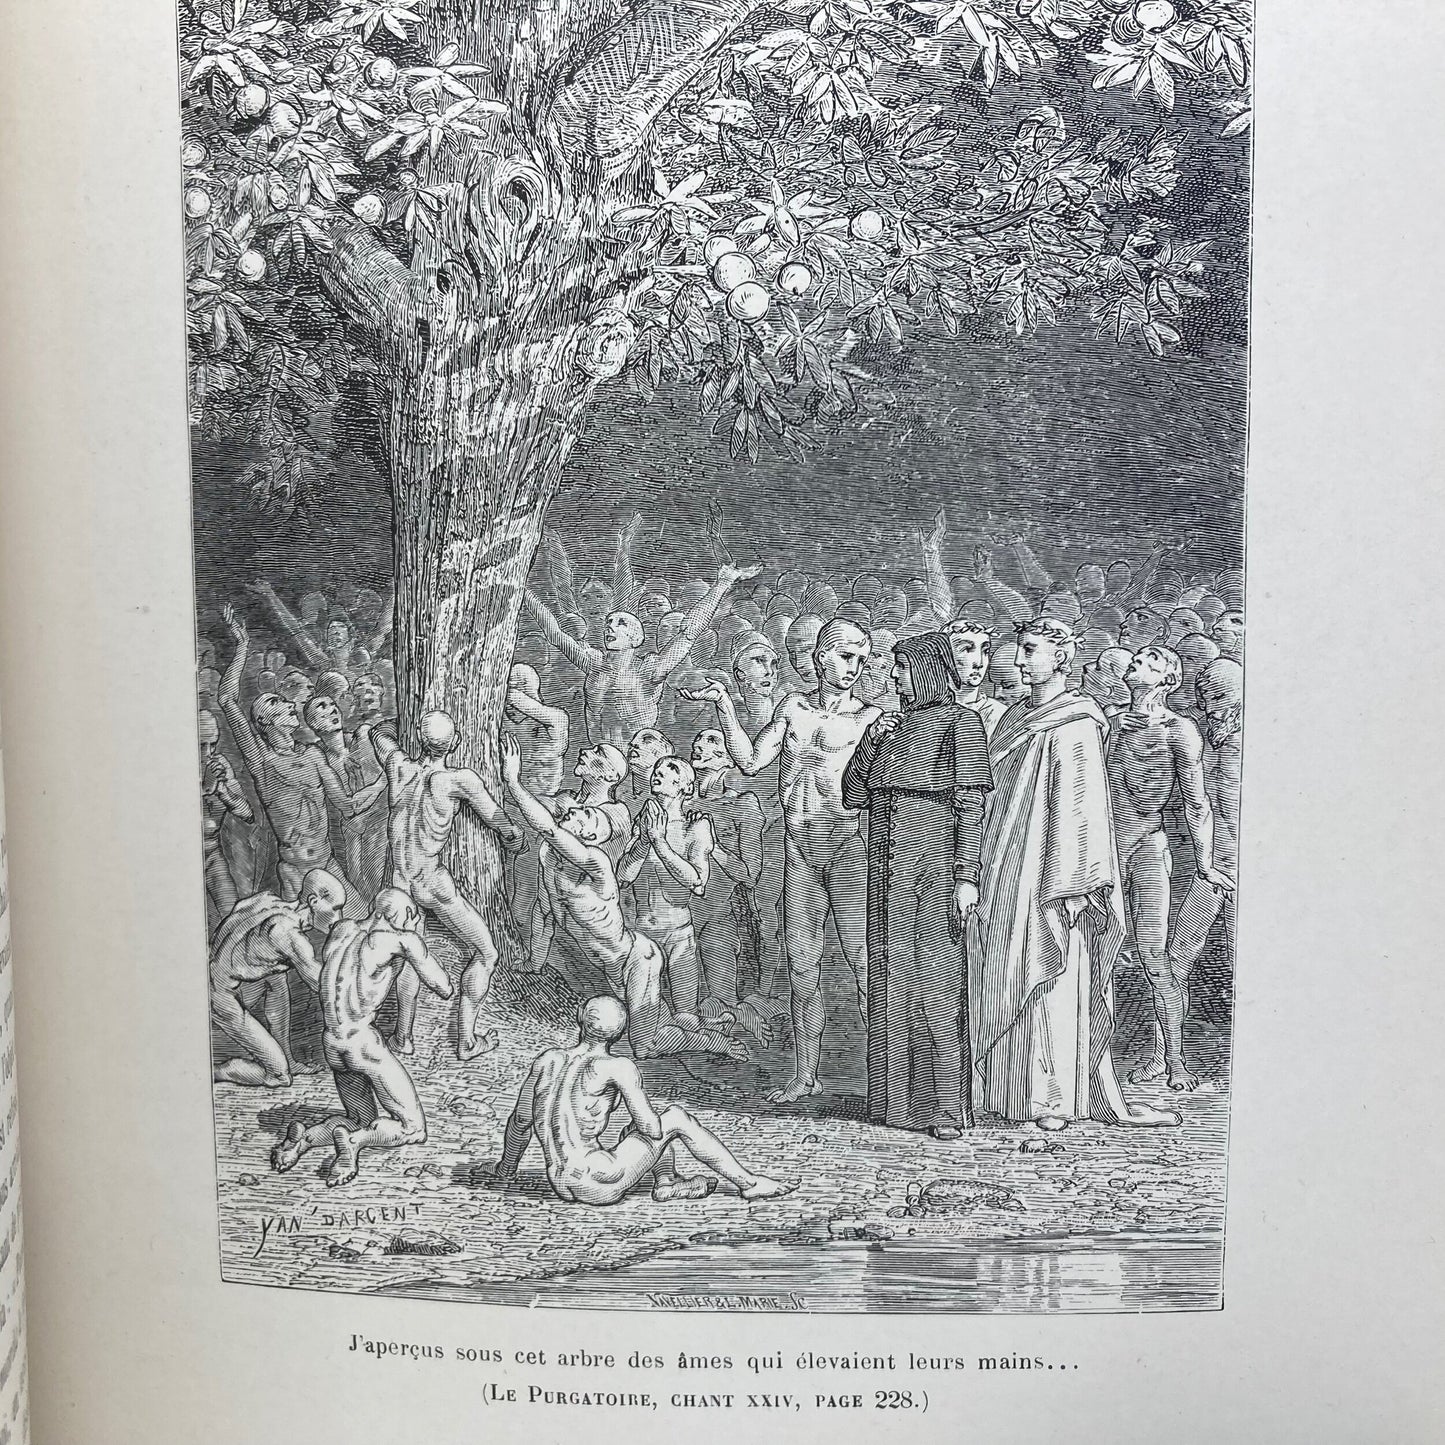 ALIGHIERI, Dante "La Divine Comedie" [Garnier Freres, 1870] - Buzz Bookstore